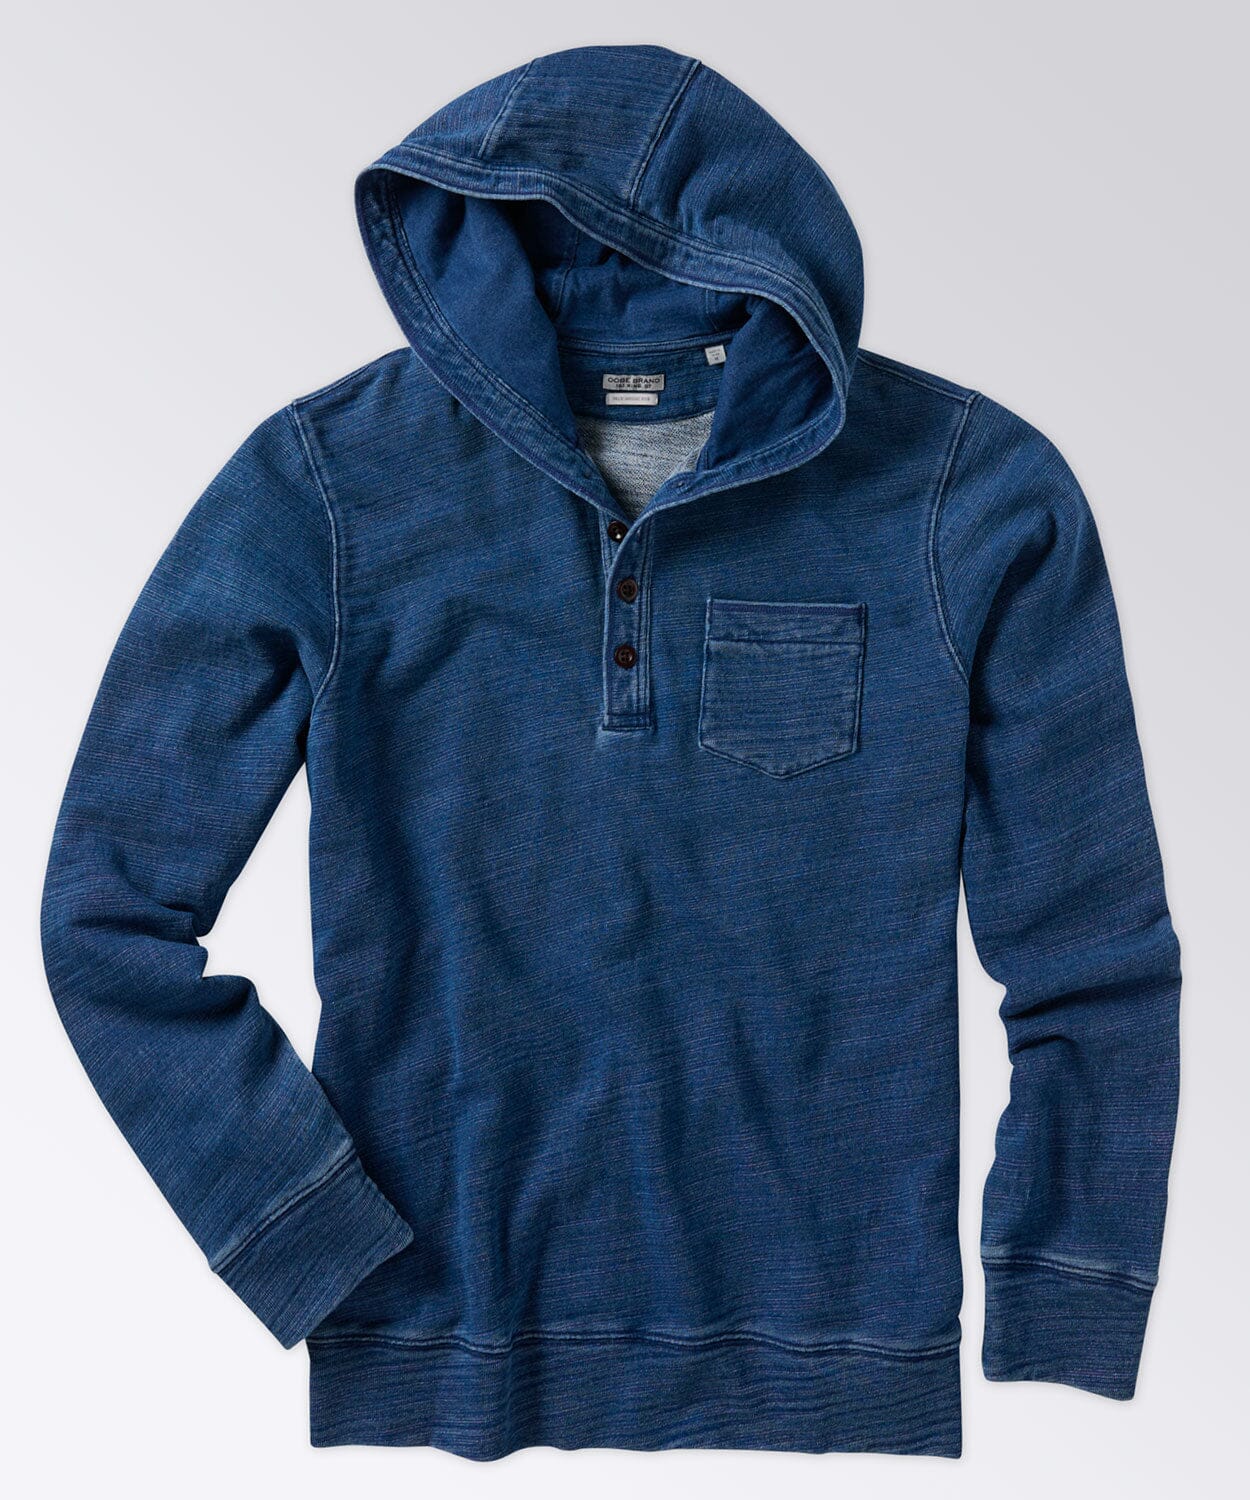 Indigo Blue Collection by OOBE BRAND | Premium Menswear